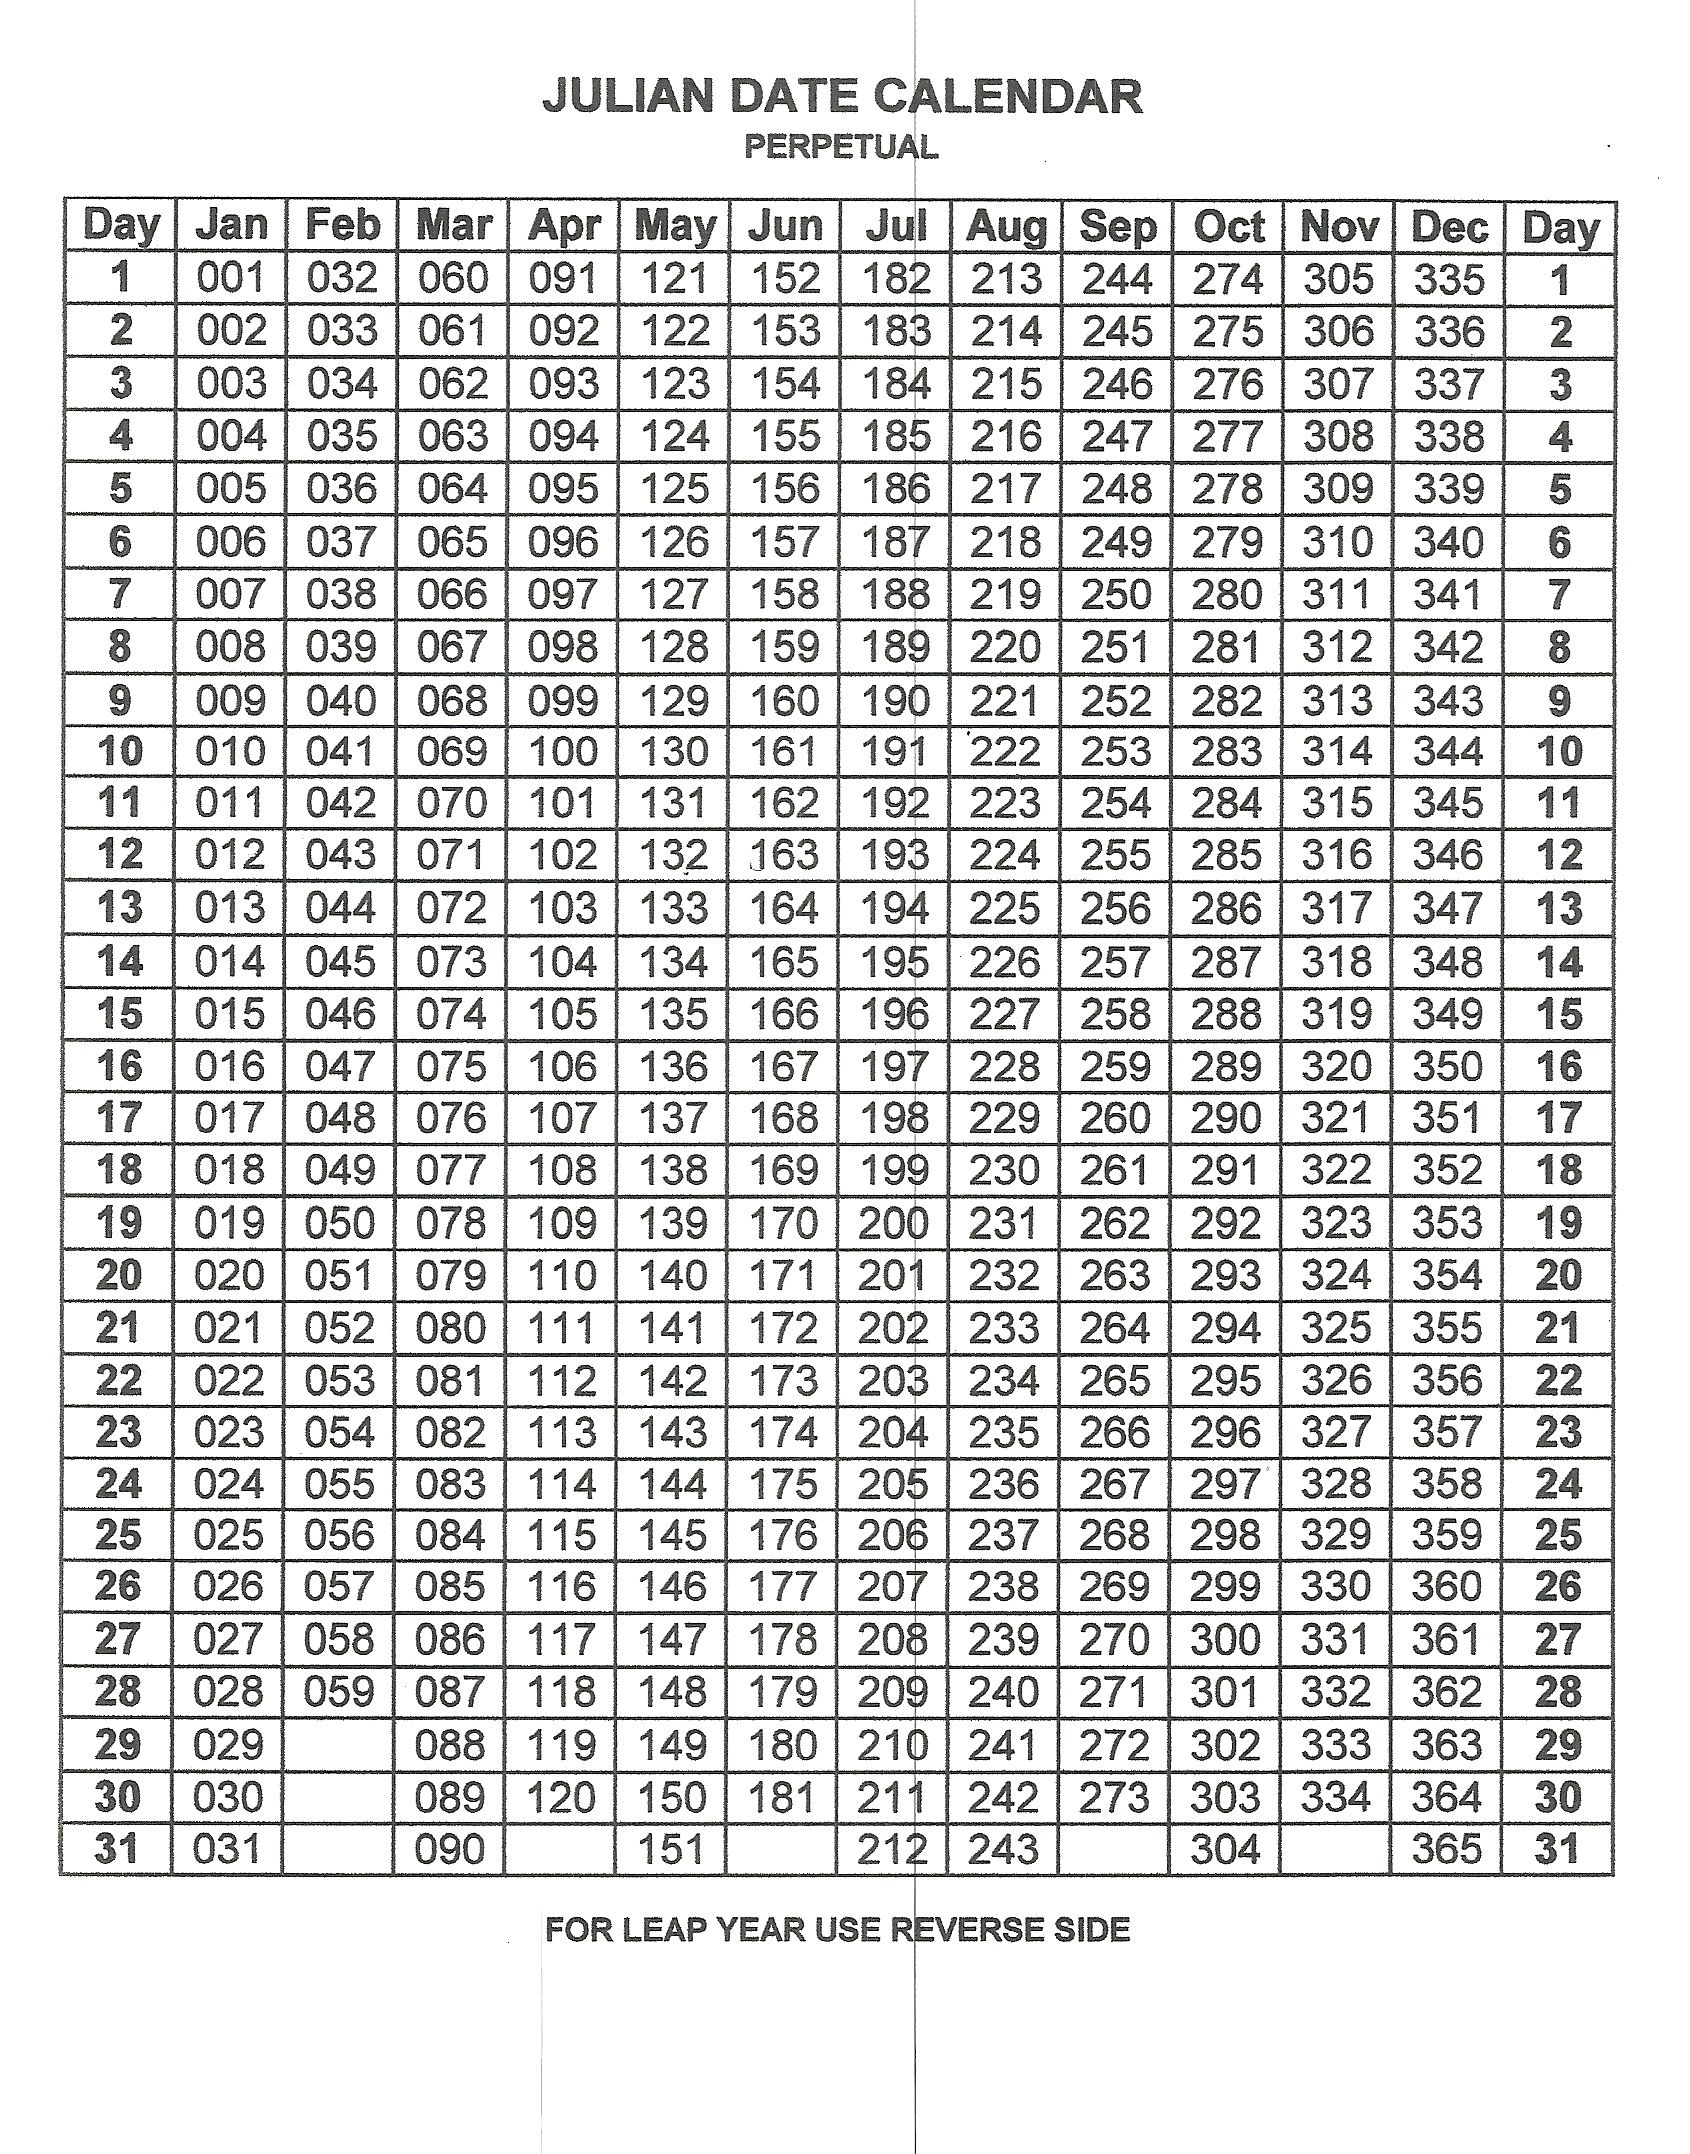 Perpetual Julian Date Calendar | Julian Dates, Calendar pertaining to 2020 Calendar With Julian Dates For Leap Year Printable